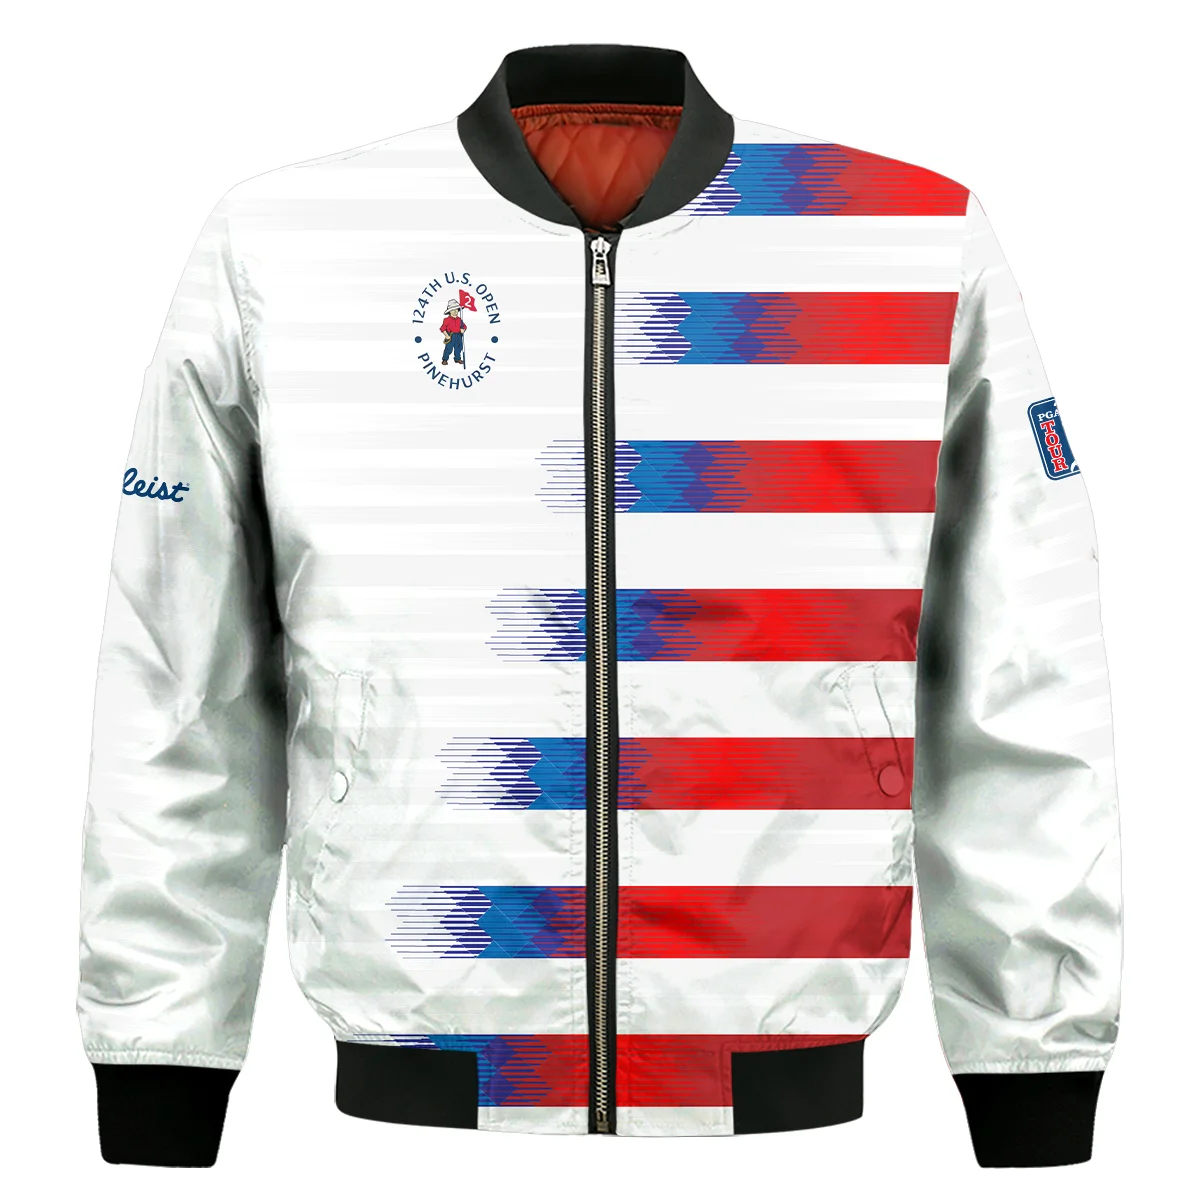 Titleist 124th U.S. Open Pinehurst Golf Sport Quarter-Zip Jacket Blue Red White Abstract All Over Print Quarter-Zip Jacket